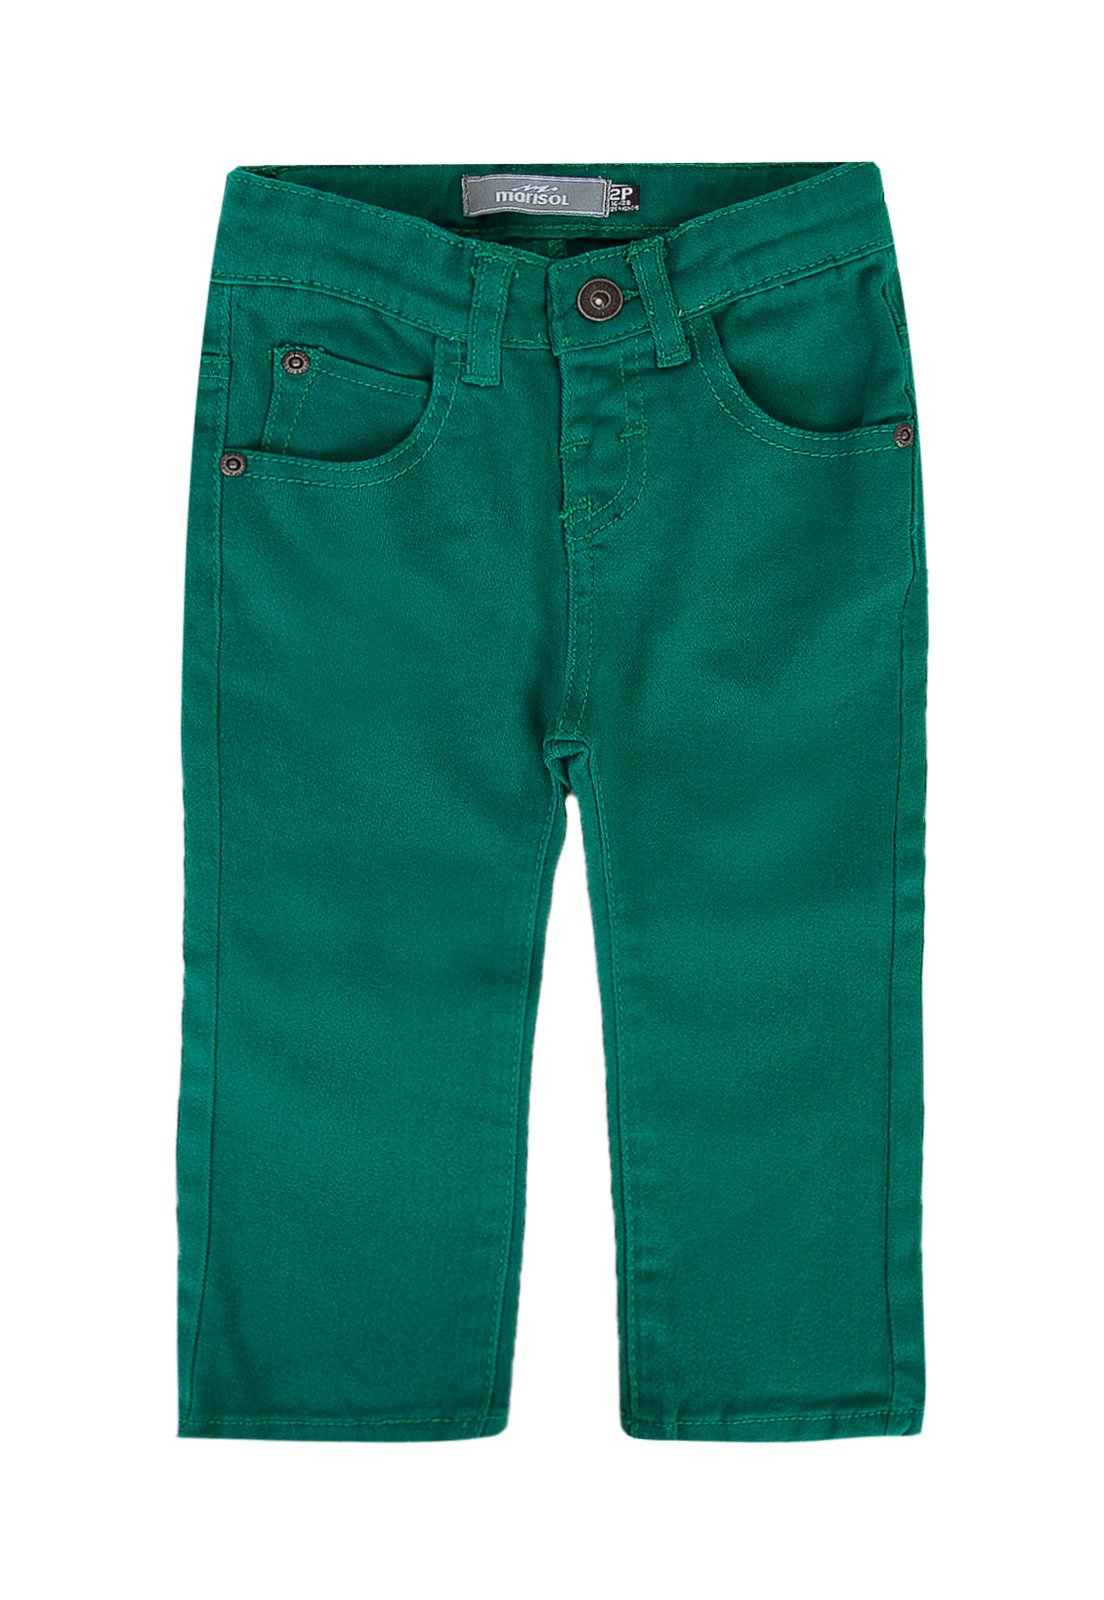 calça verde infantil masculina